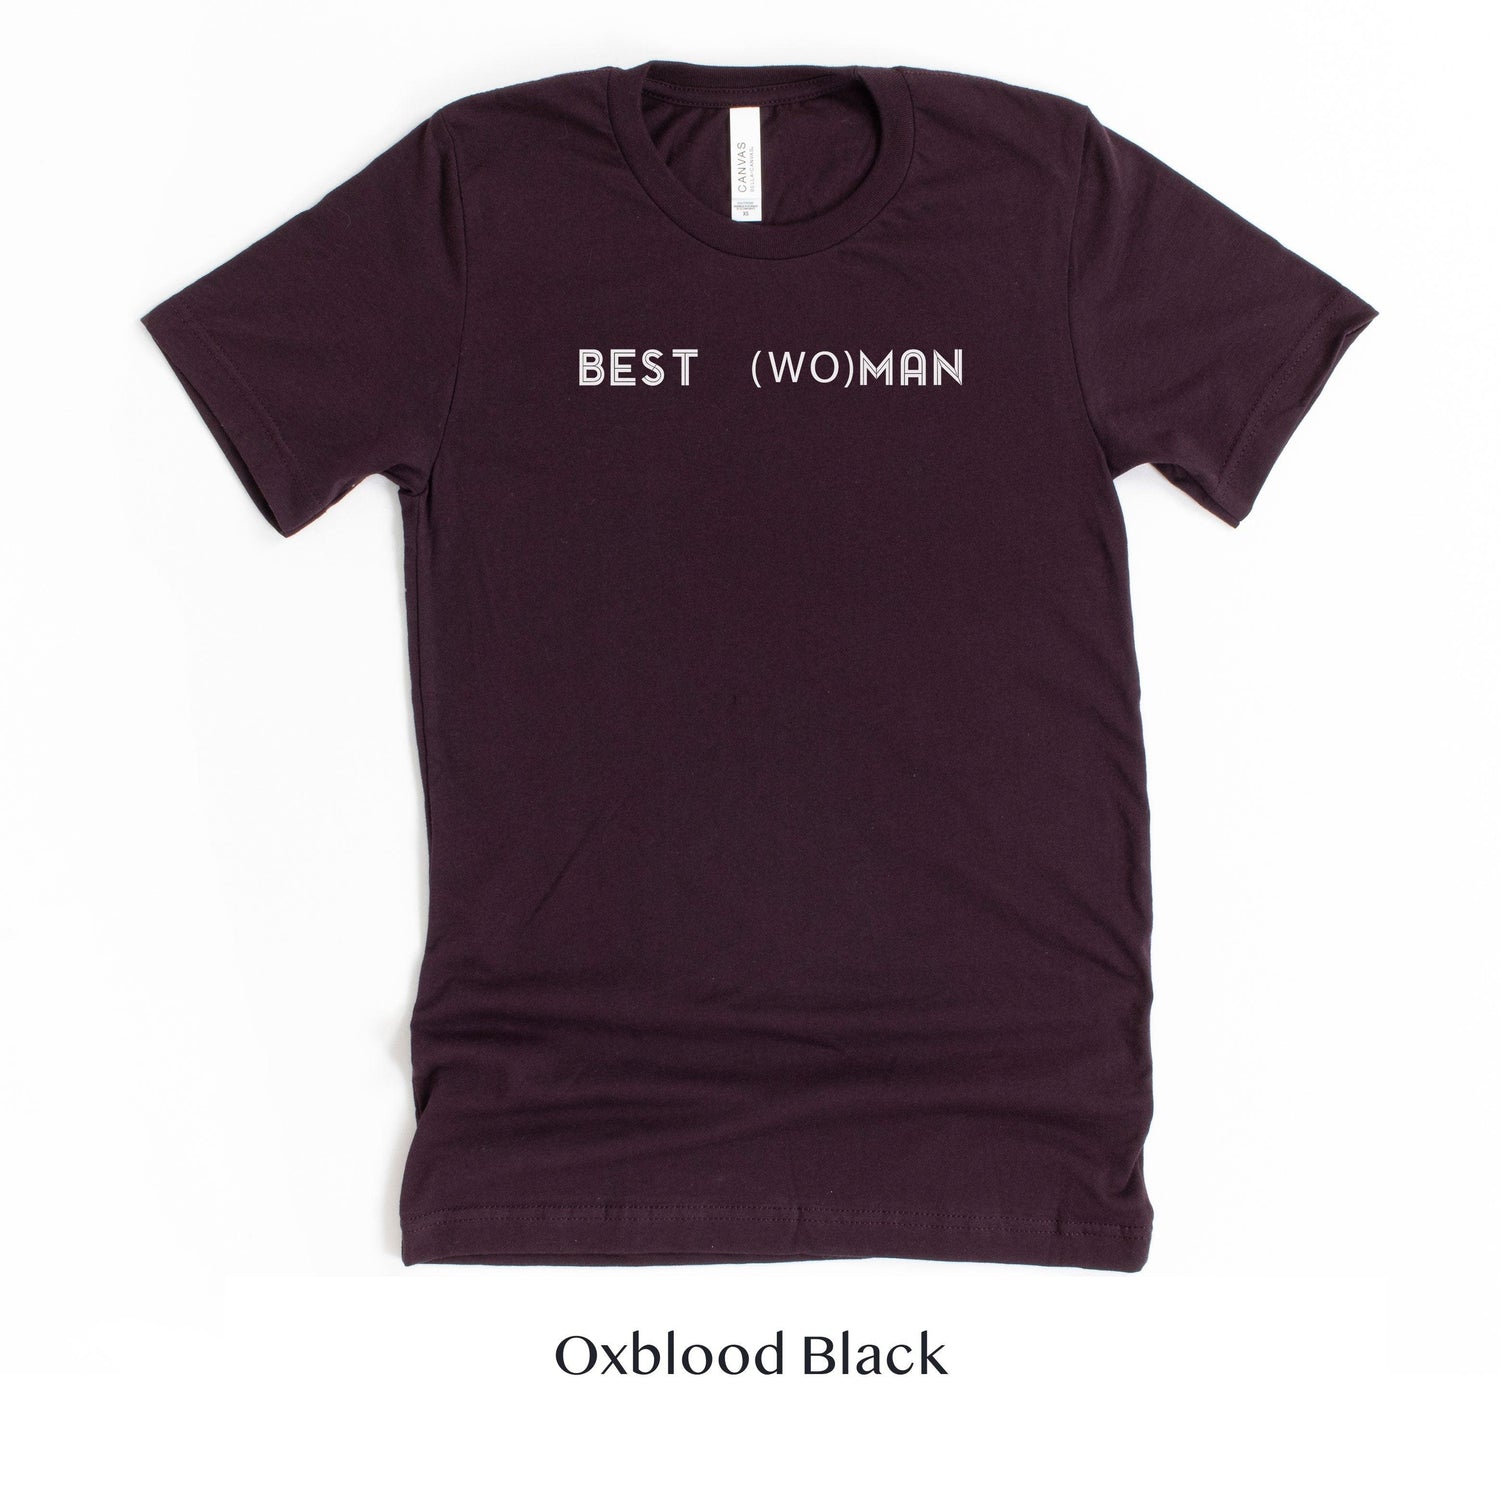 Best Woman Shirt - Matching Wedding Party tshirts - Unisex t-shirt by Oaklynn Lane - oxblood deep red shirt